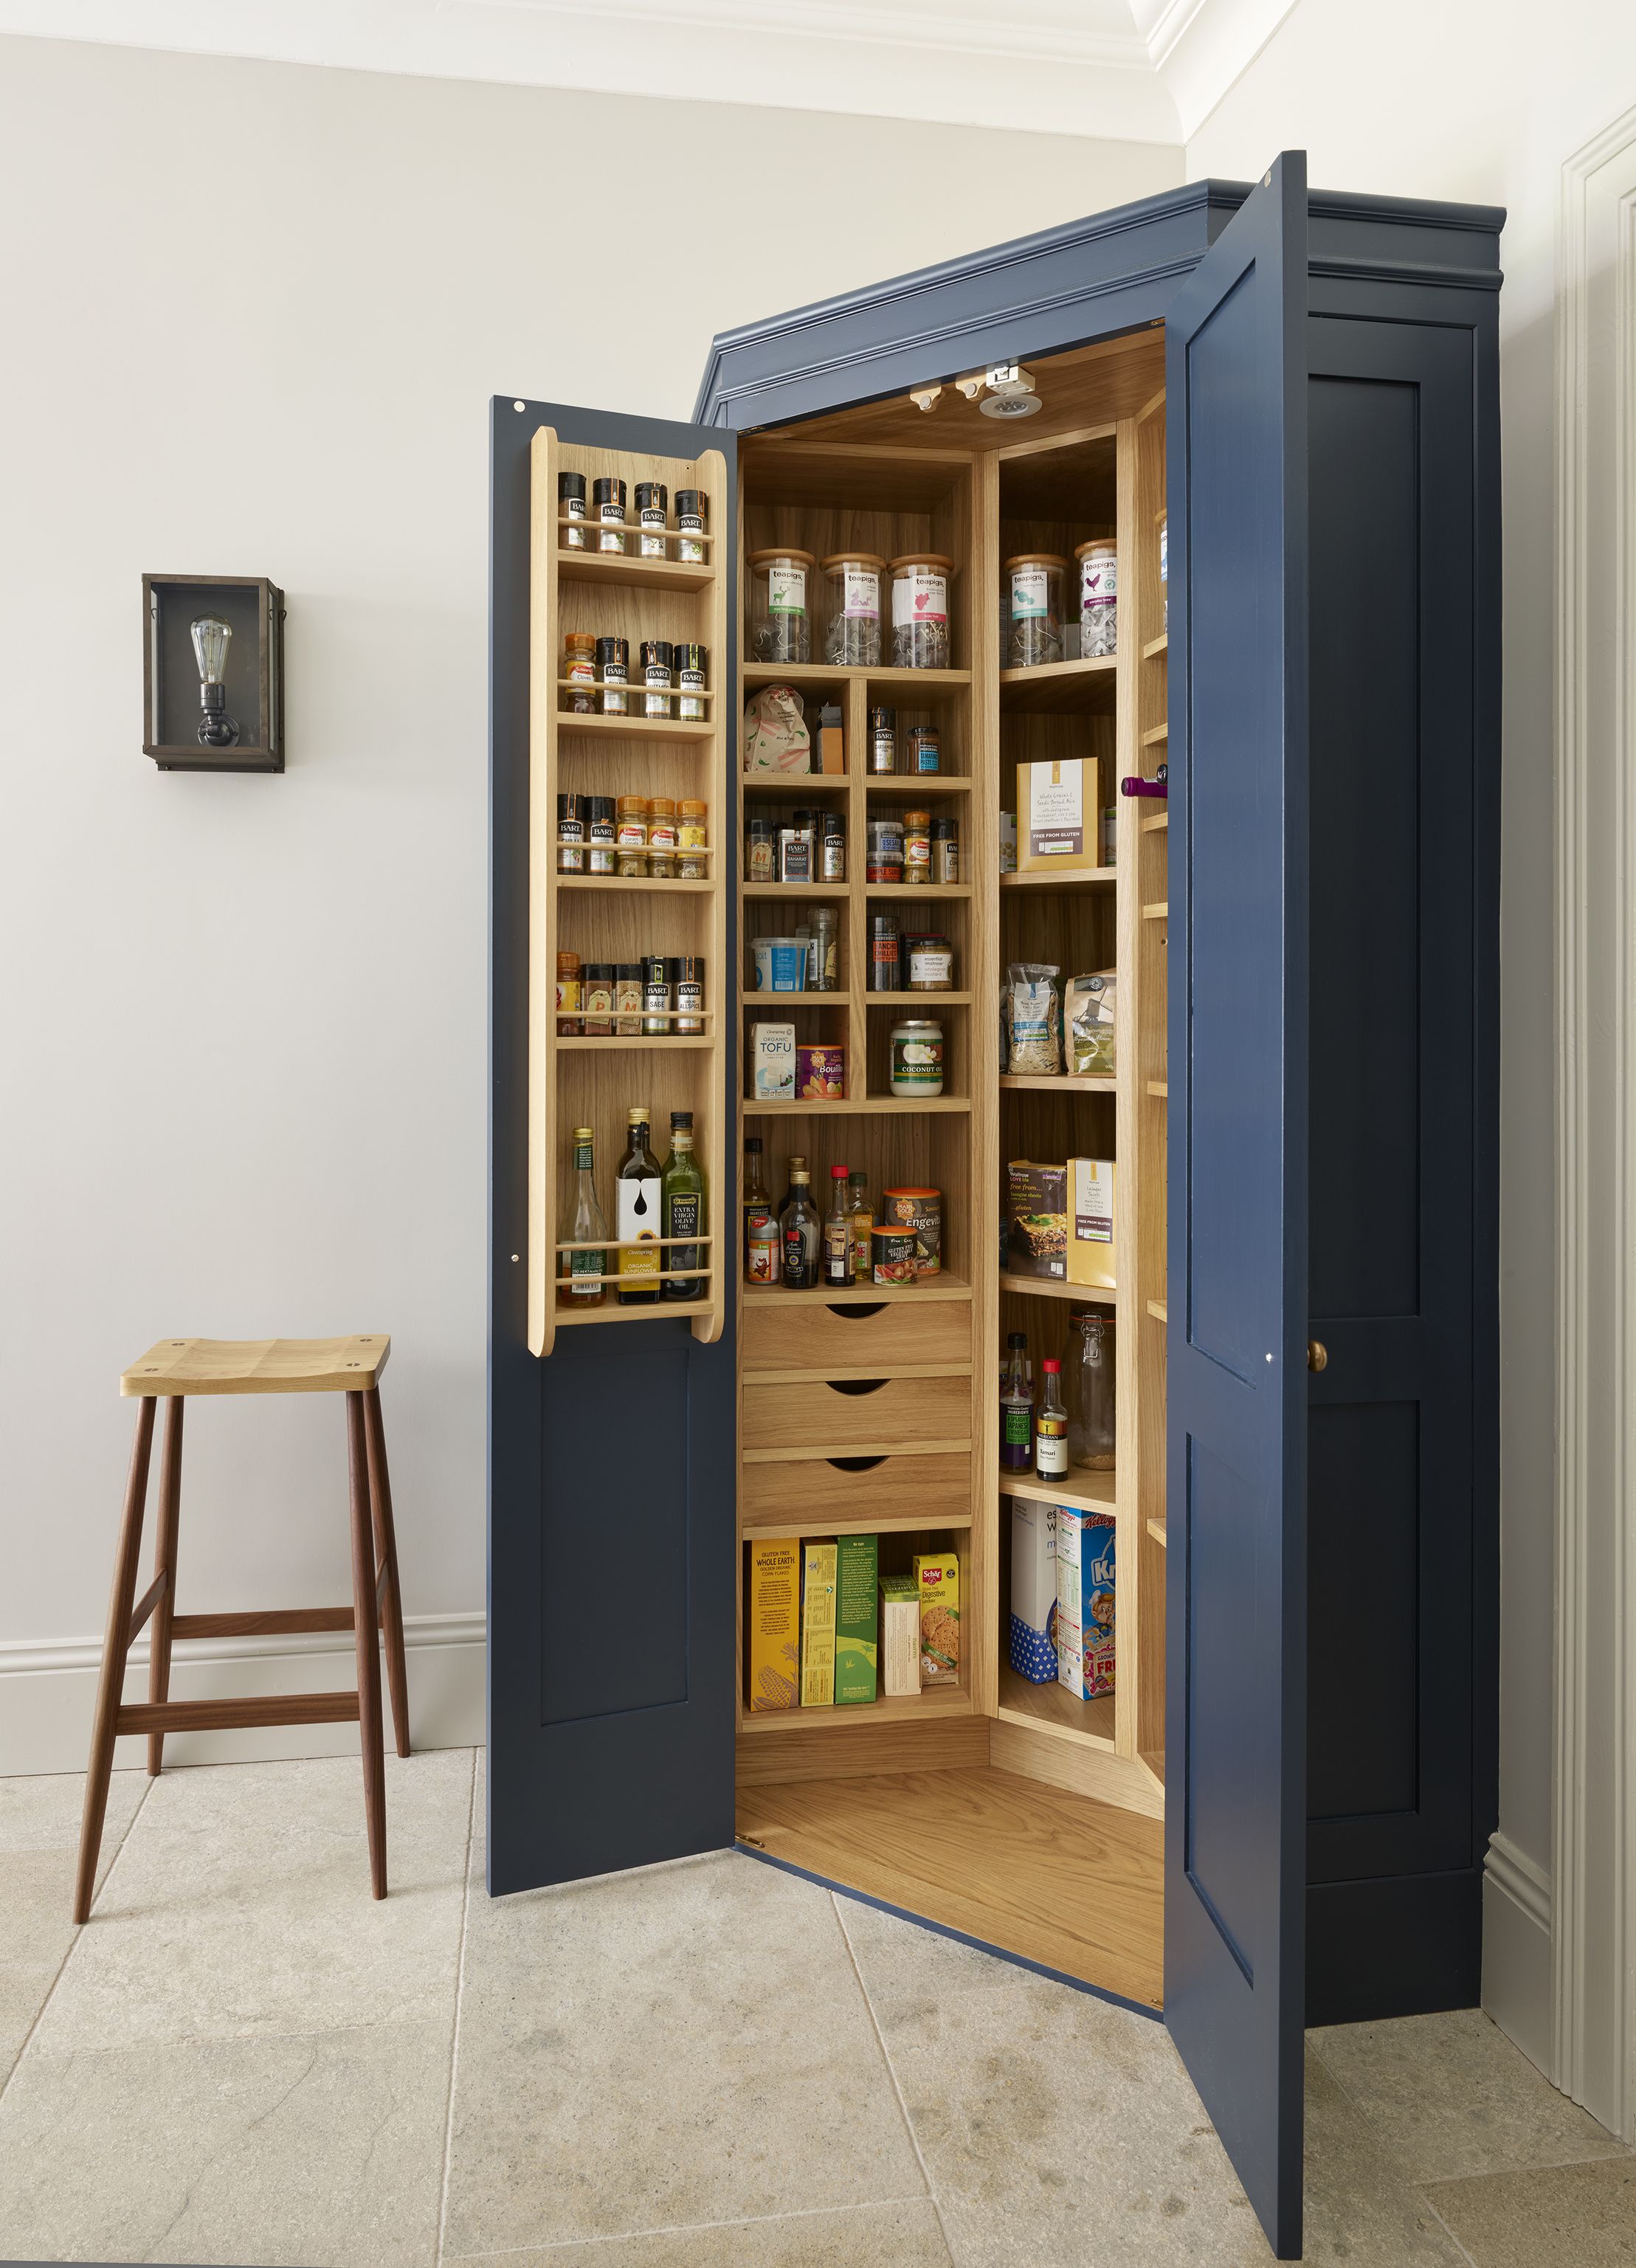 12 Pantry Ideas Larder Cupboard Ideas For Every Kitchen